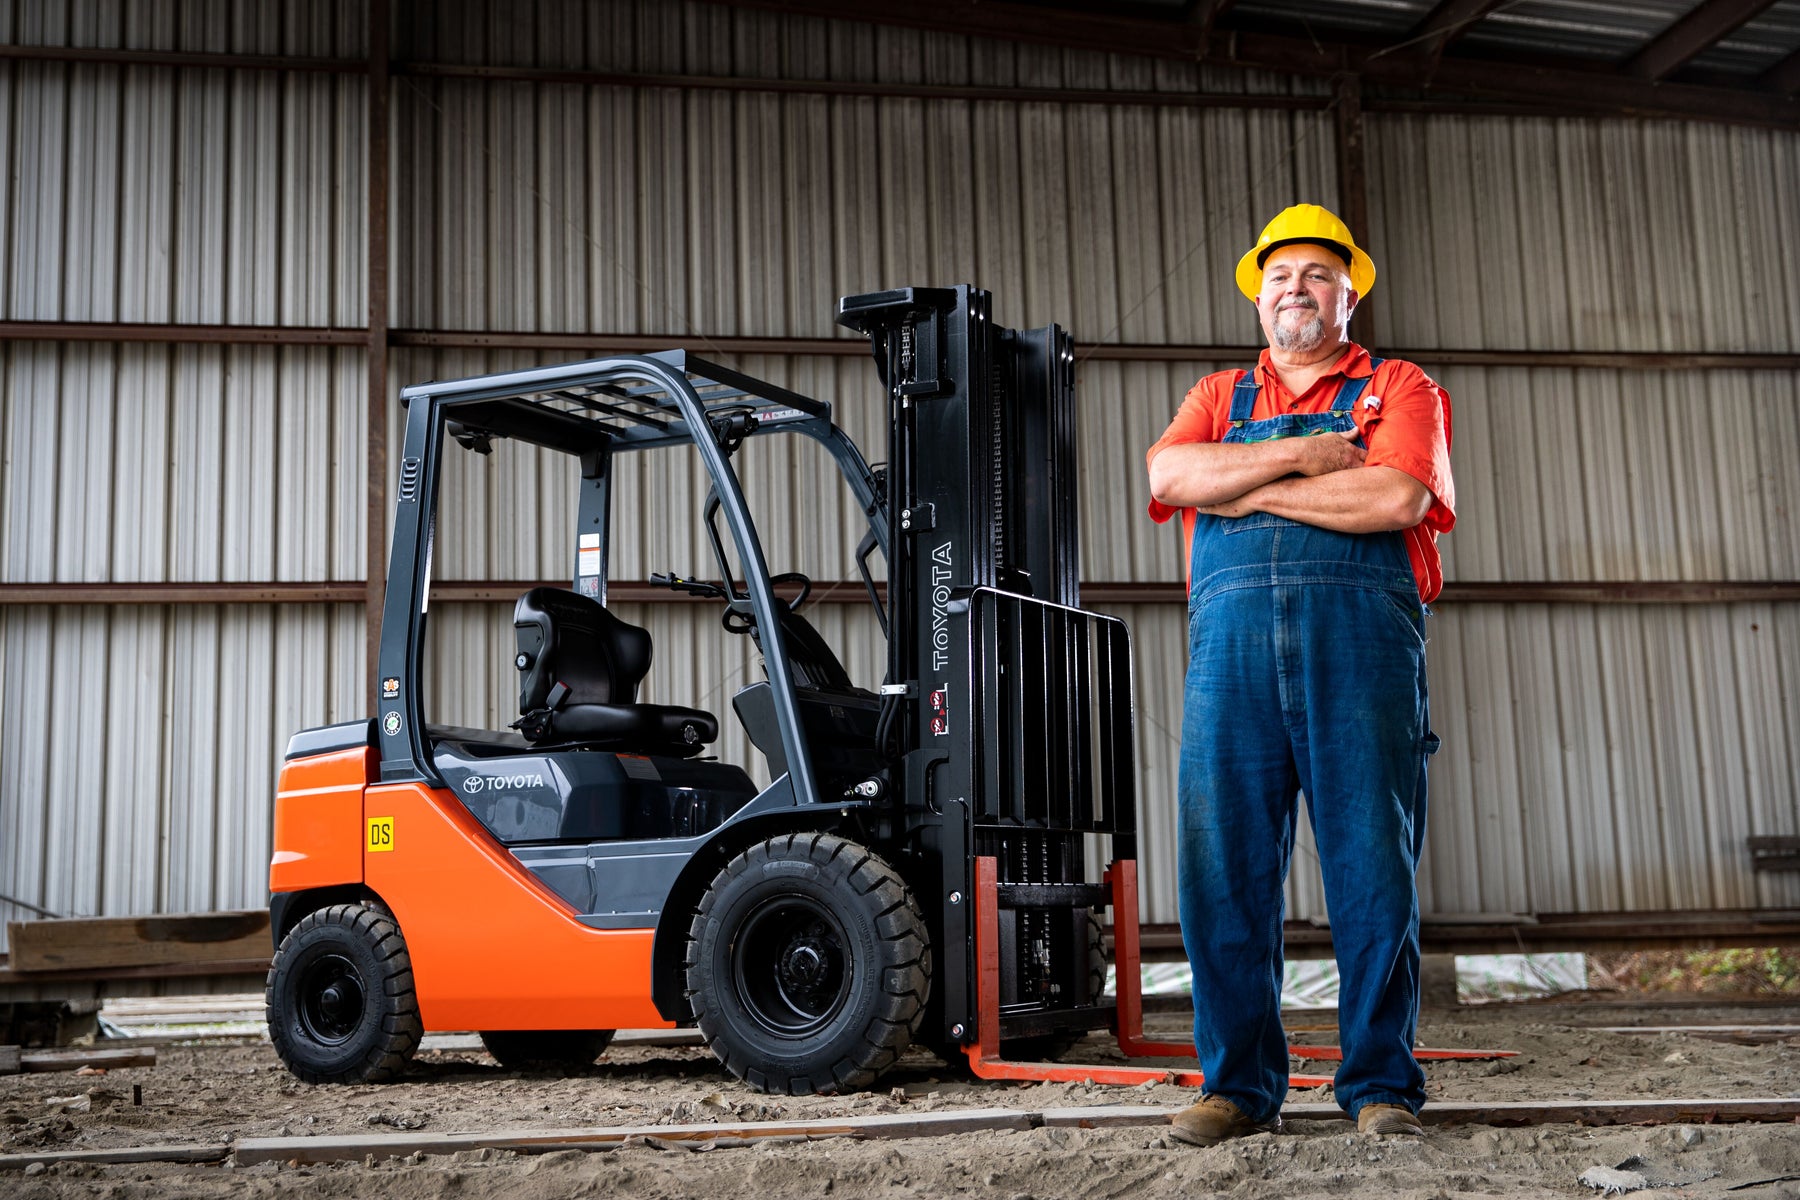 Ergonomic Forklift Equipment Your Employees Will Appreciate